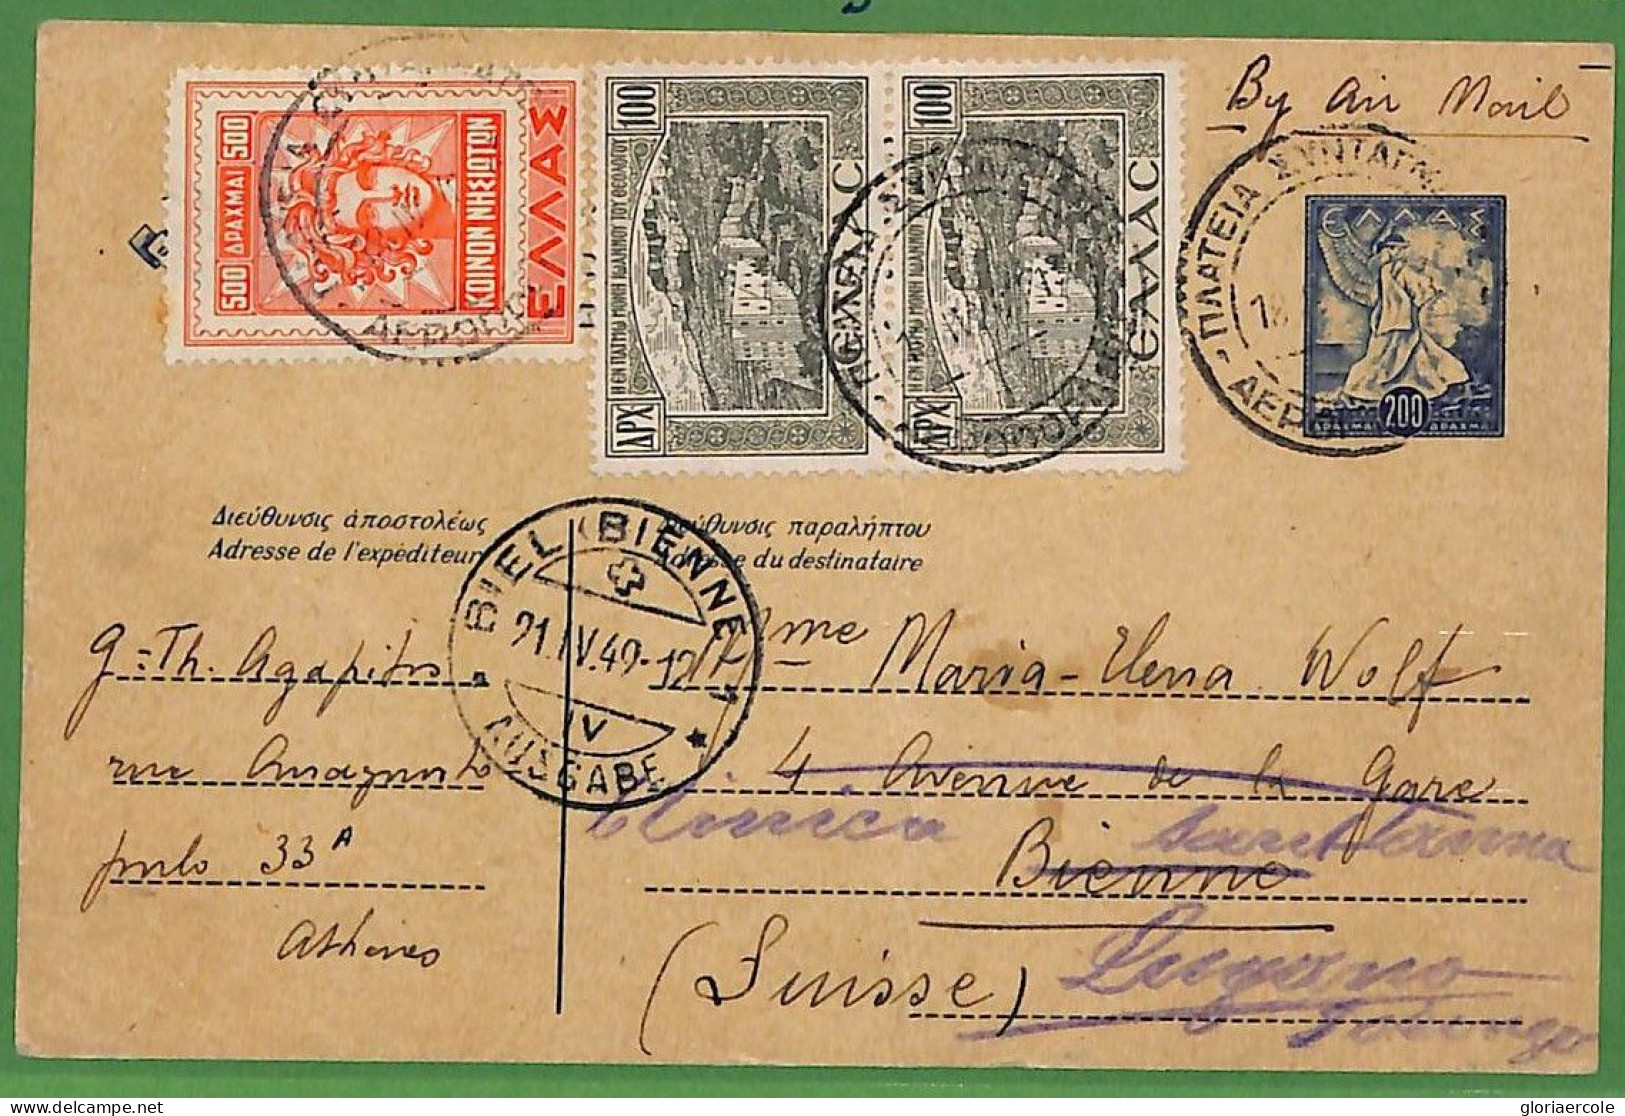 Ad0921 - GREECE - Postal History - Postal STATIONERY CARD Added Franking  To SWITZERLAND 1949 - Entiers Postaux